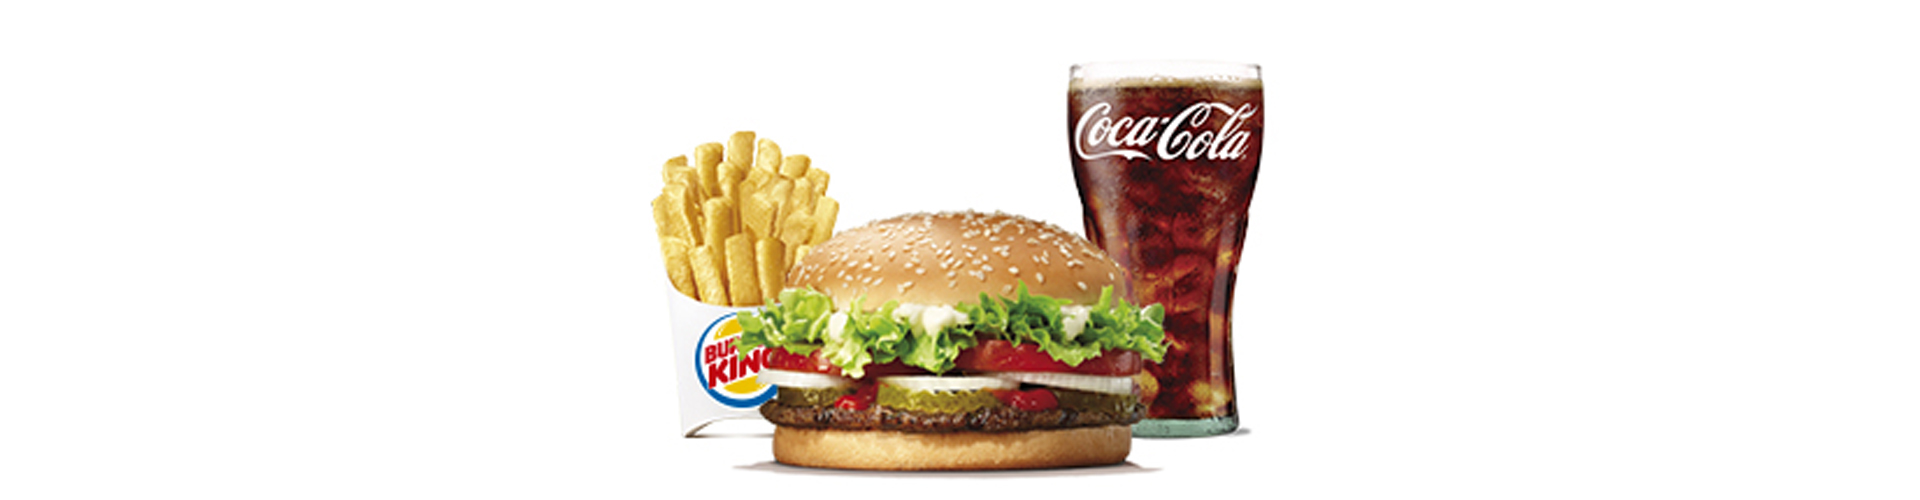 menu-whopper-burgerking-40001707-cocacola-aros